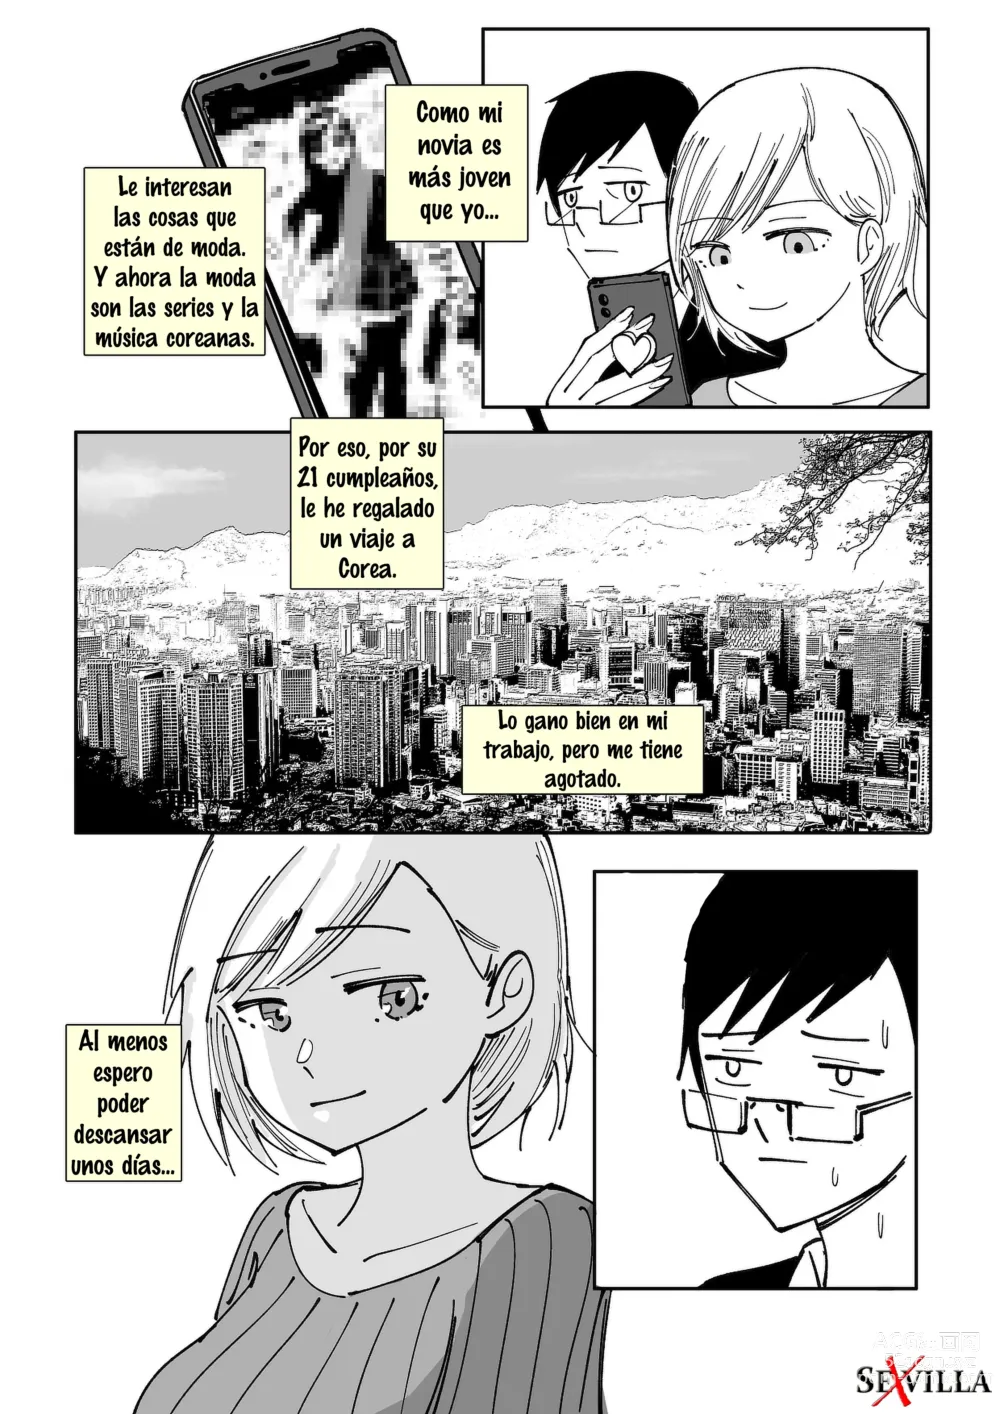 Page 3 of manga VIAJE A COREA